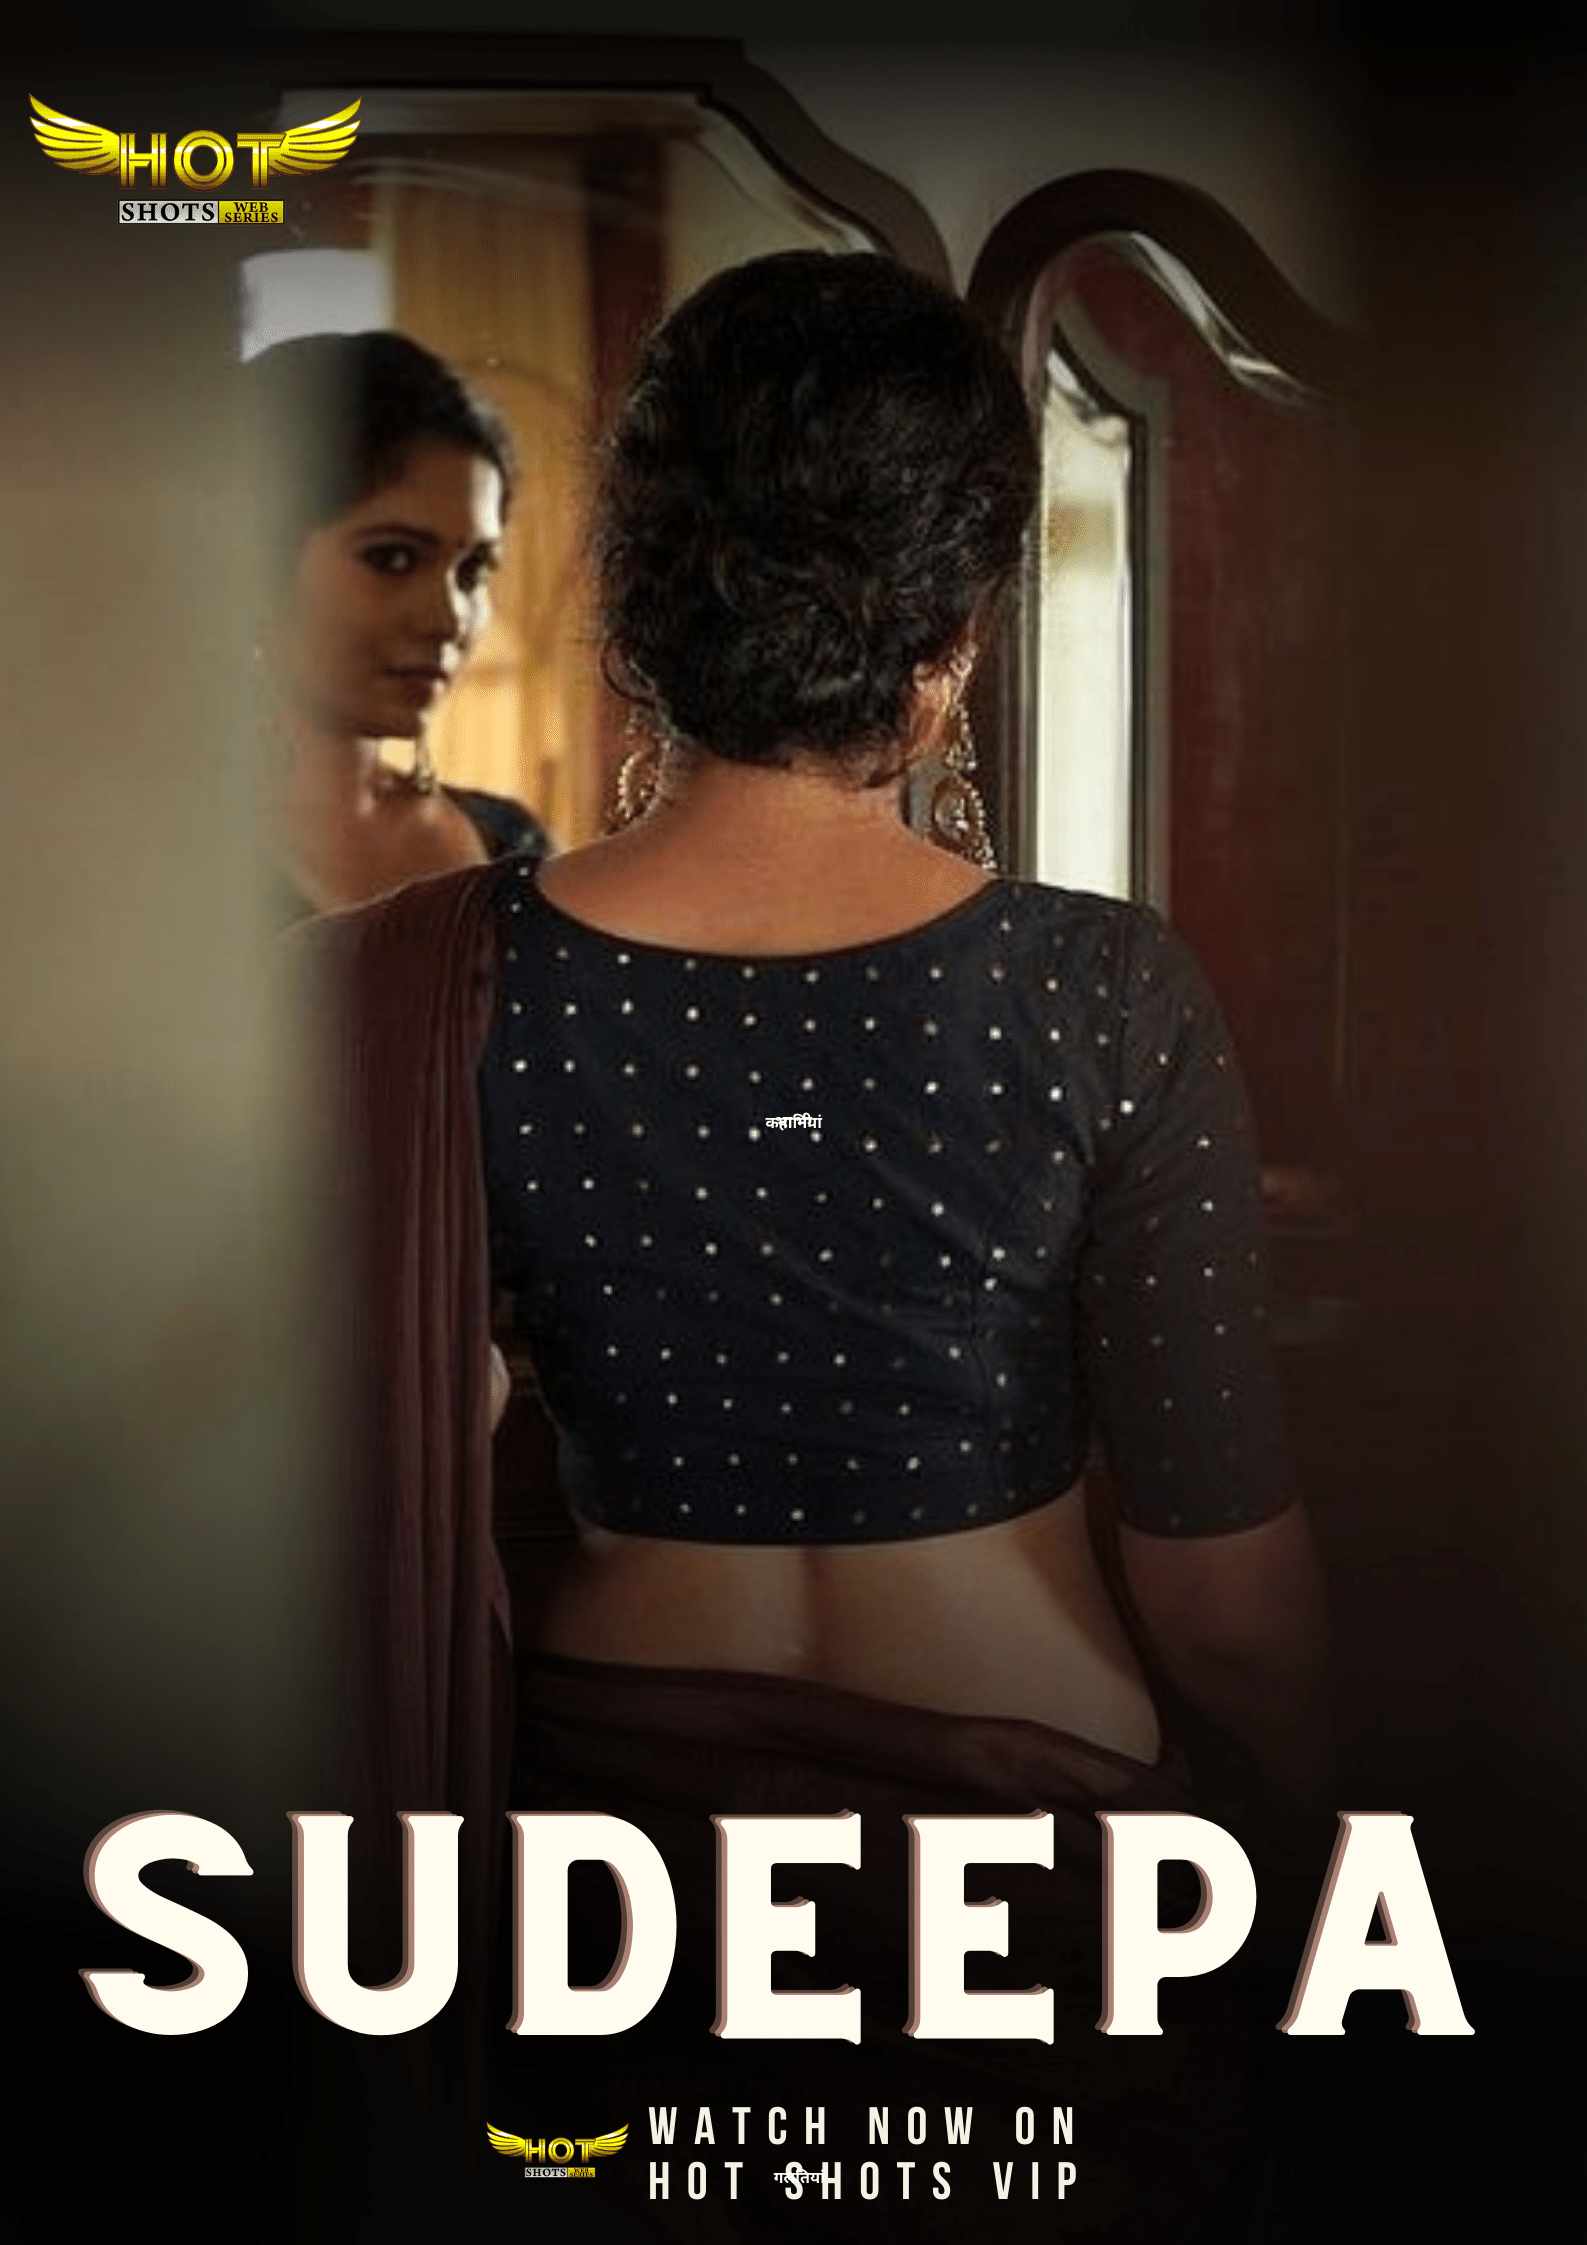 Dirty Sudeepa